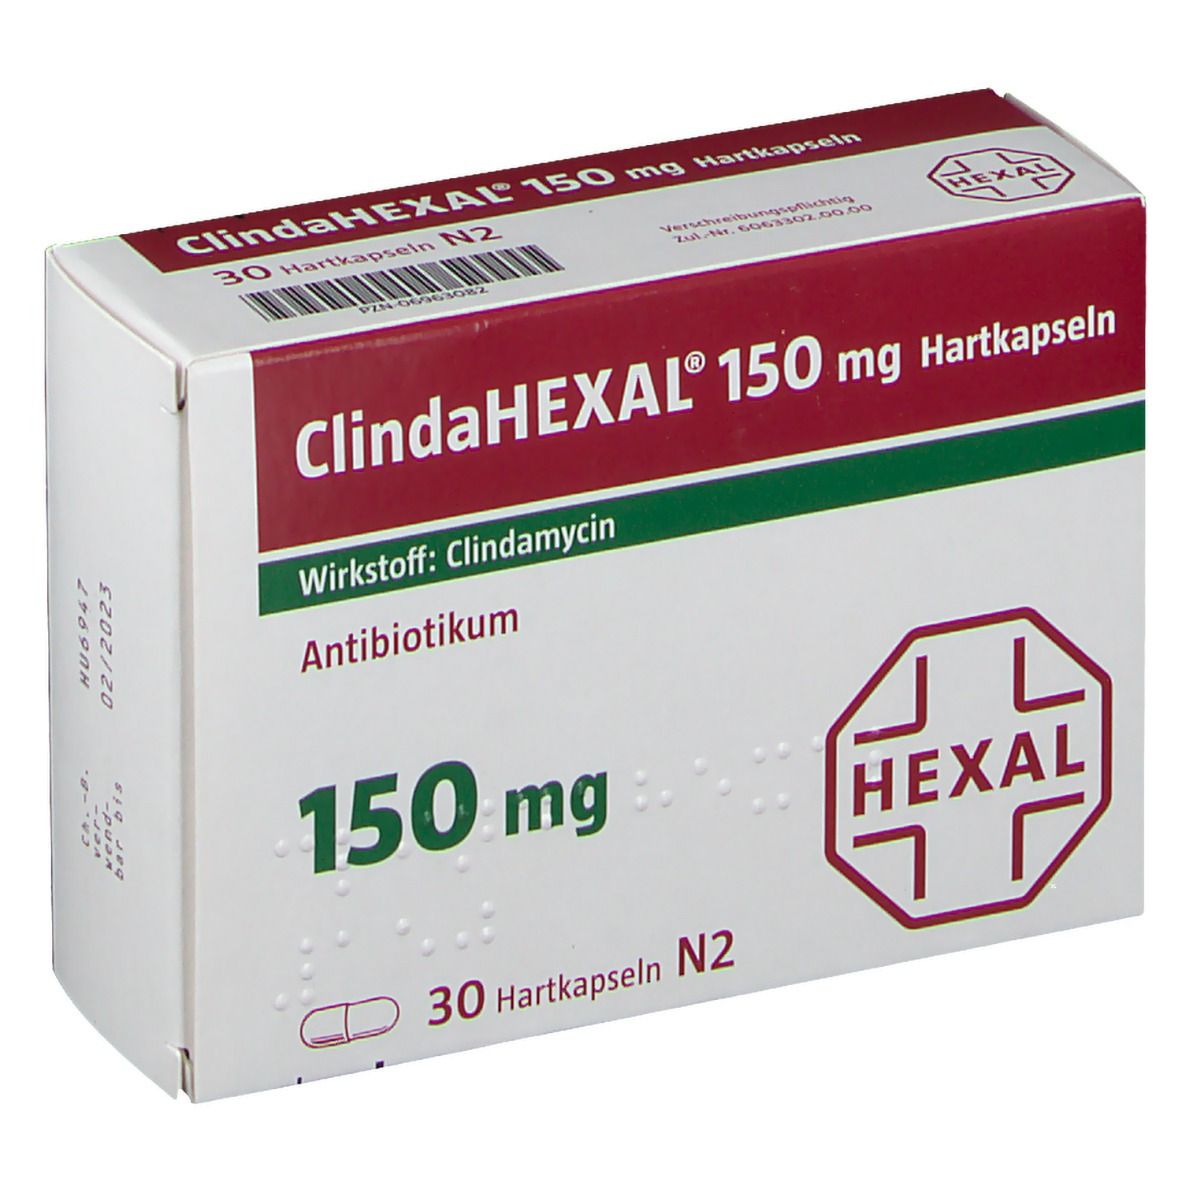 ClindaHEXAL® 150 mg